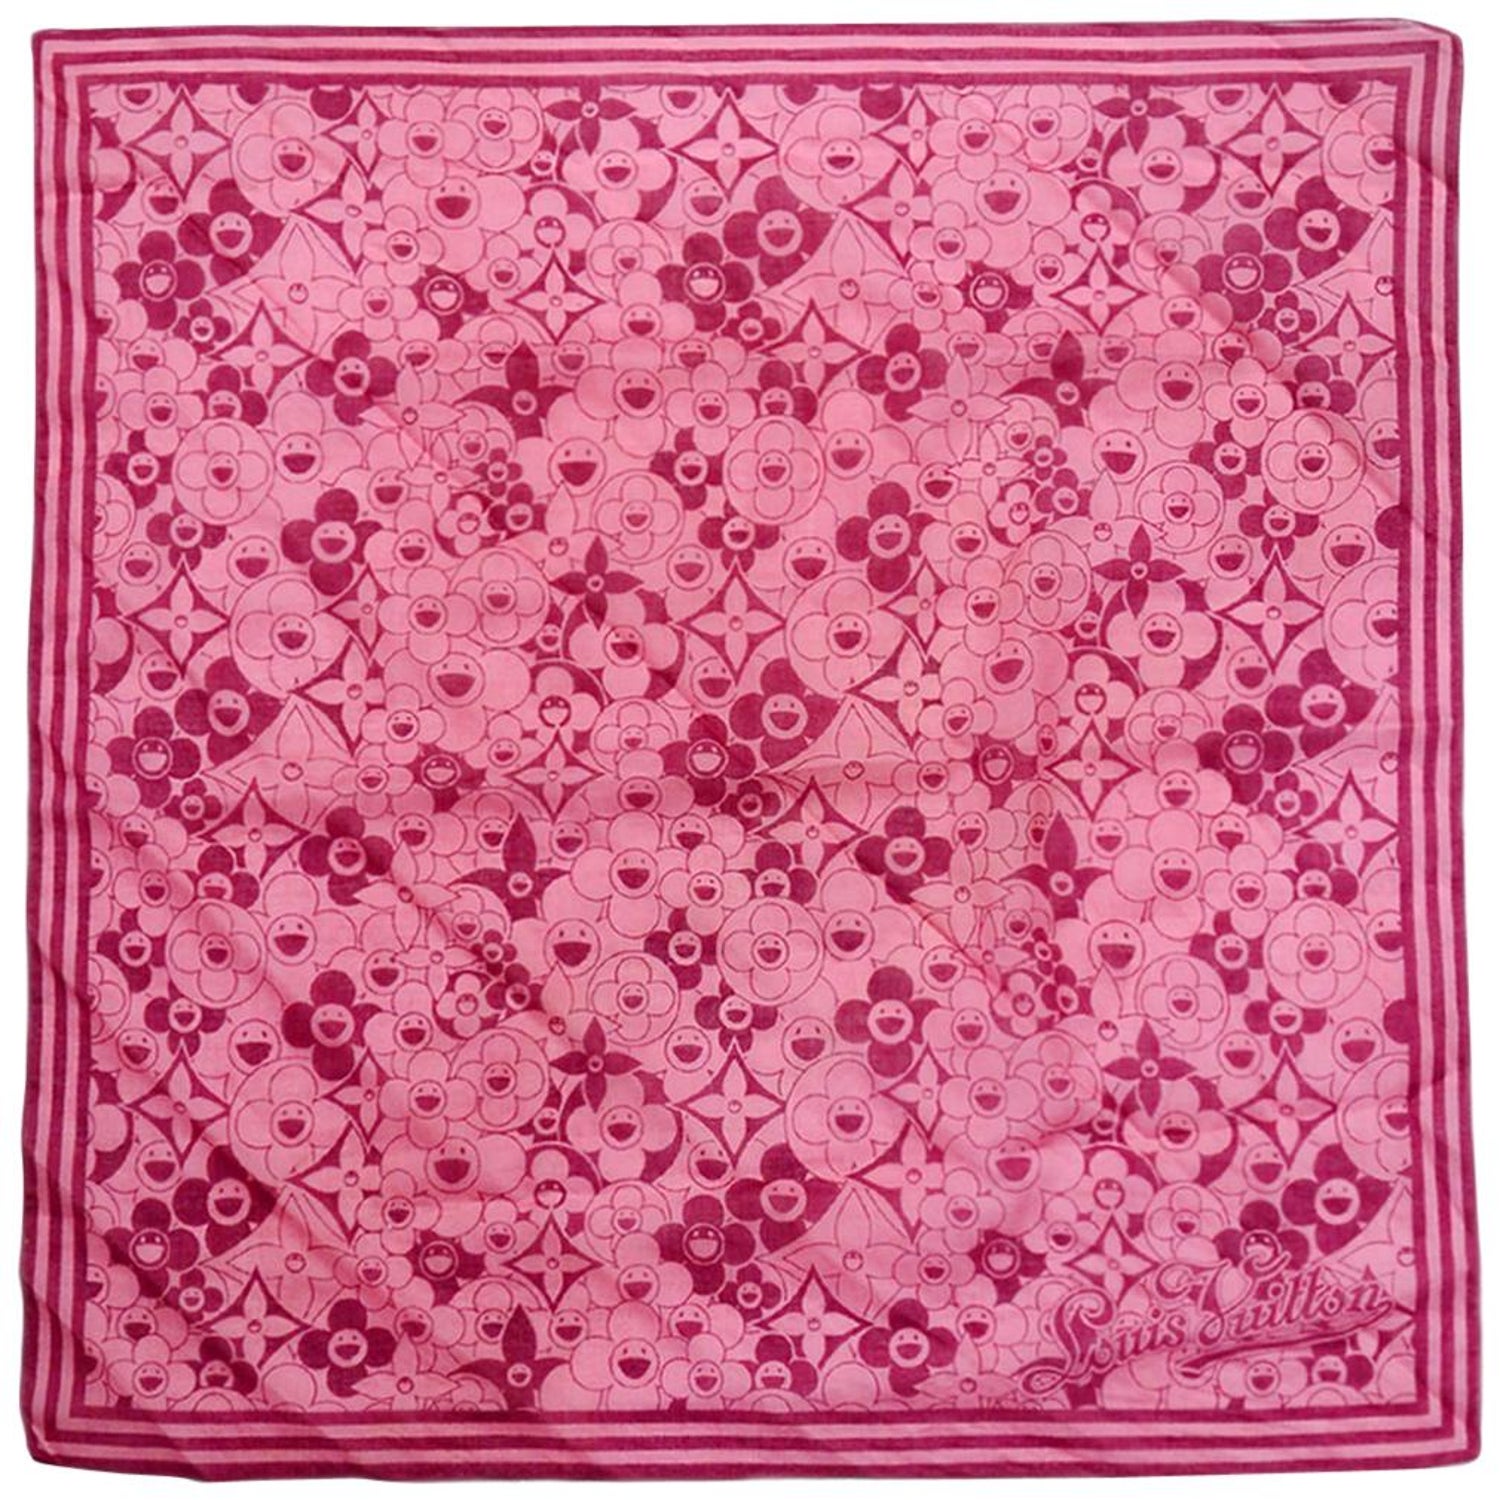 Preowned Authentic Louis Vuitton Takashi Murakami collaboration Panda Onion  Head Flower Hatman silk scarf Pink